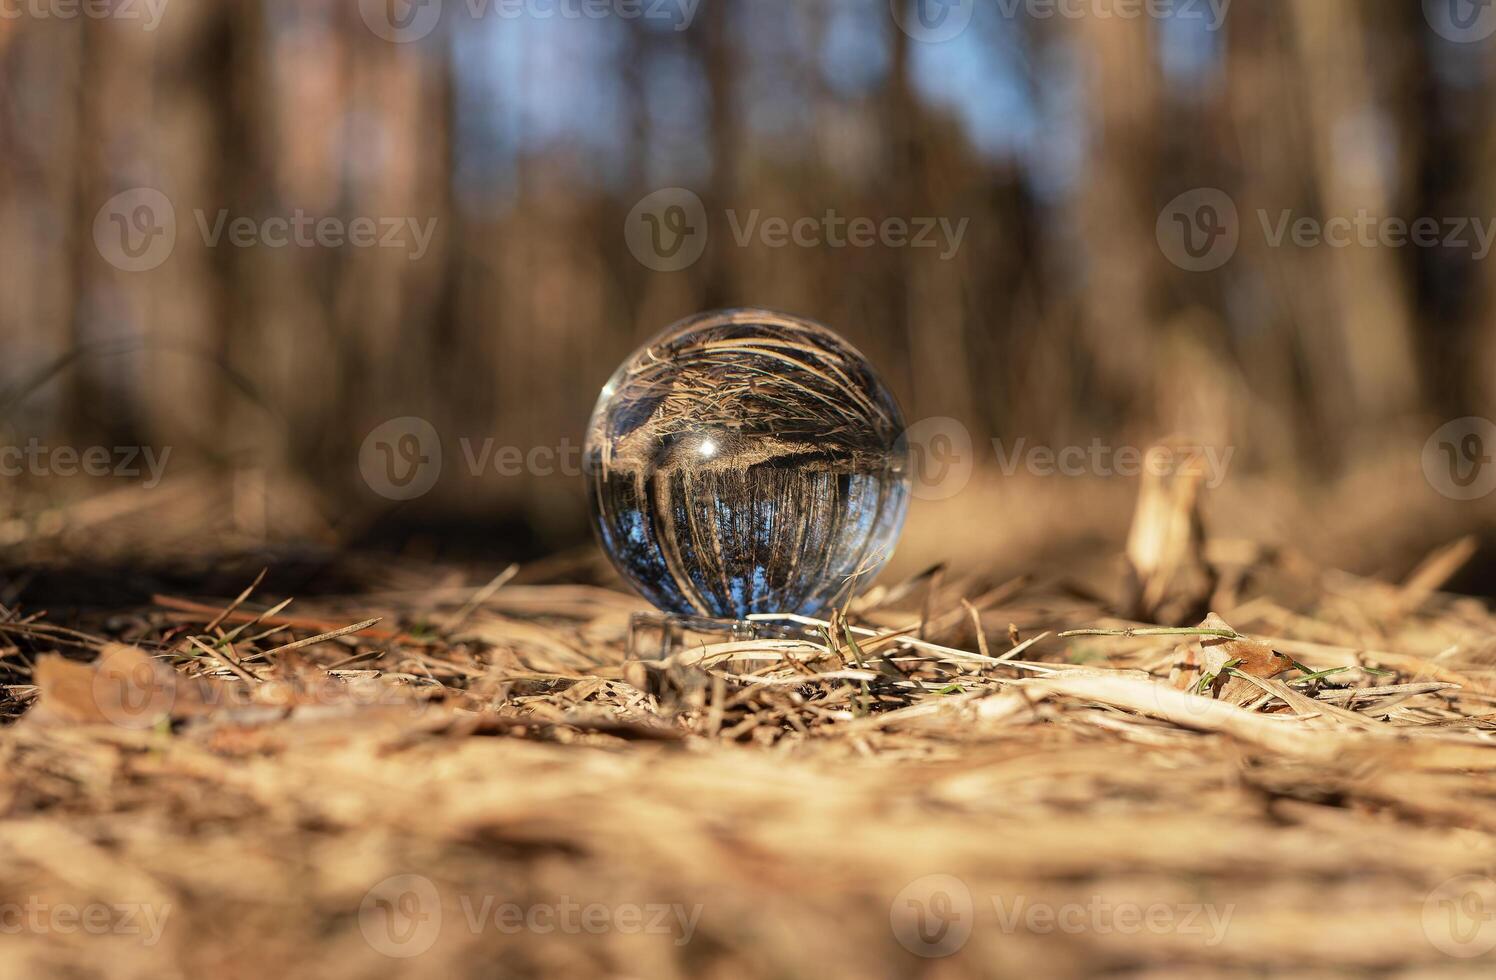 kristal glas transparant bal Aan droog geel gras. natuur concept foto